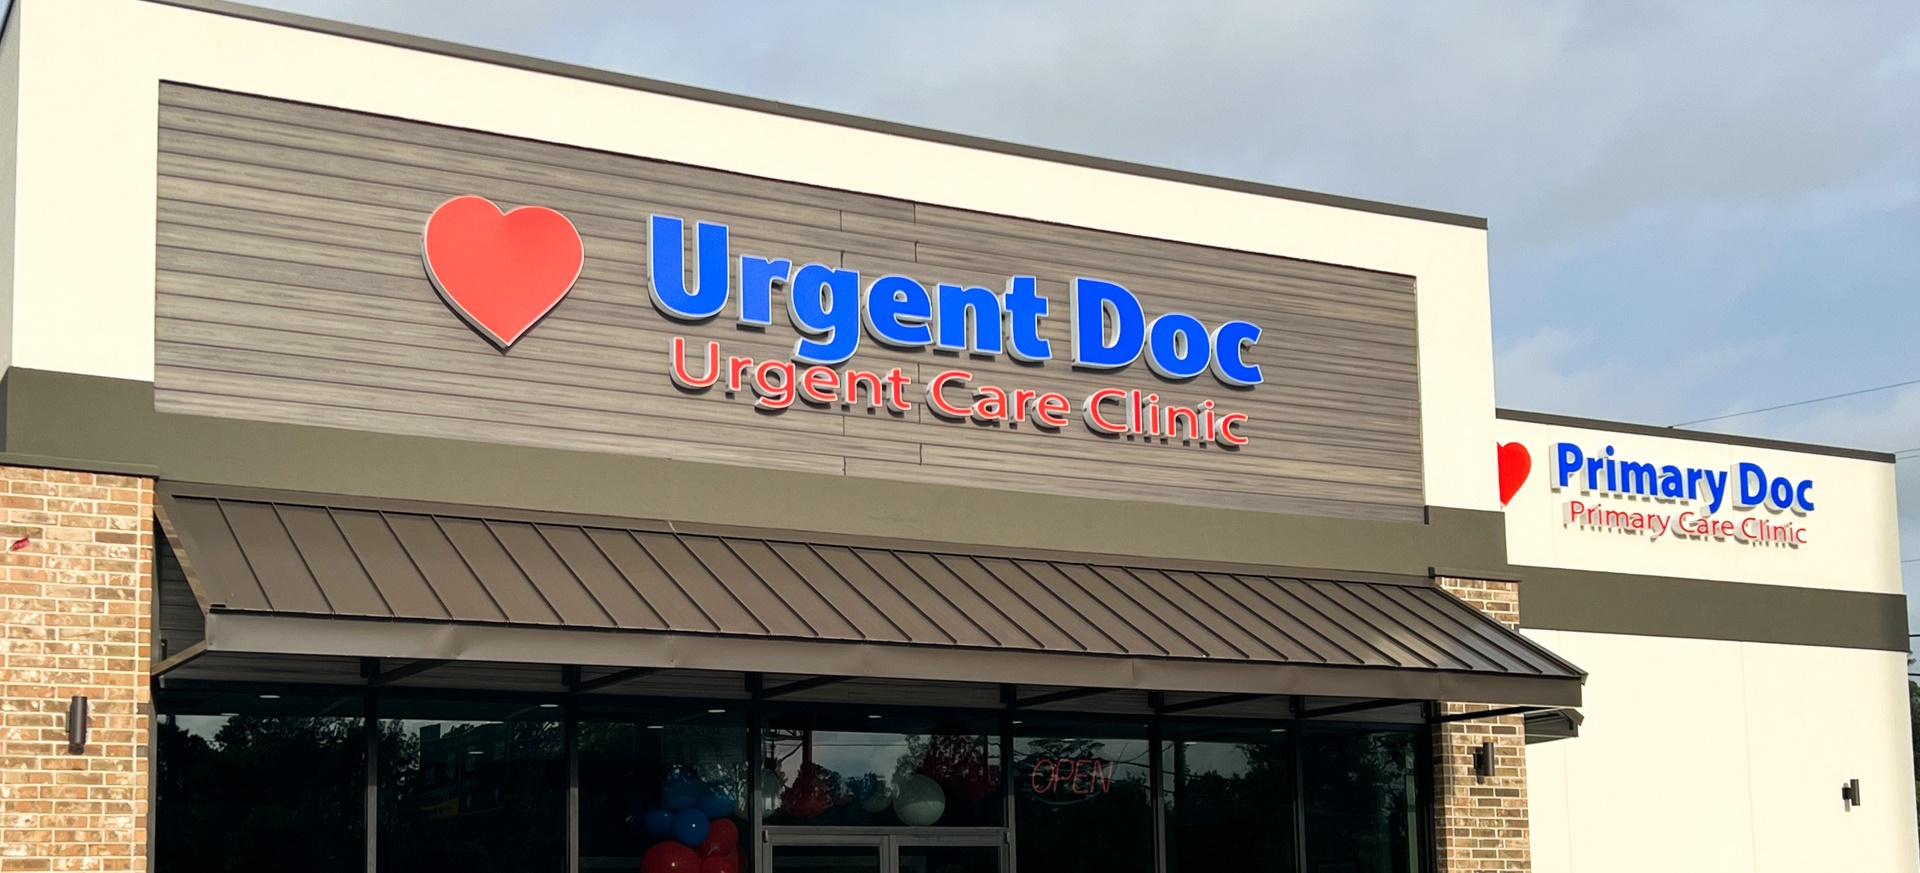 Urgent care Texas by Urgent Doc